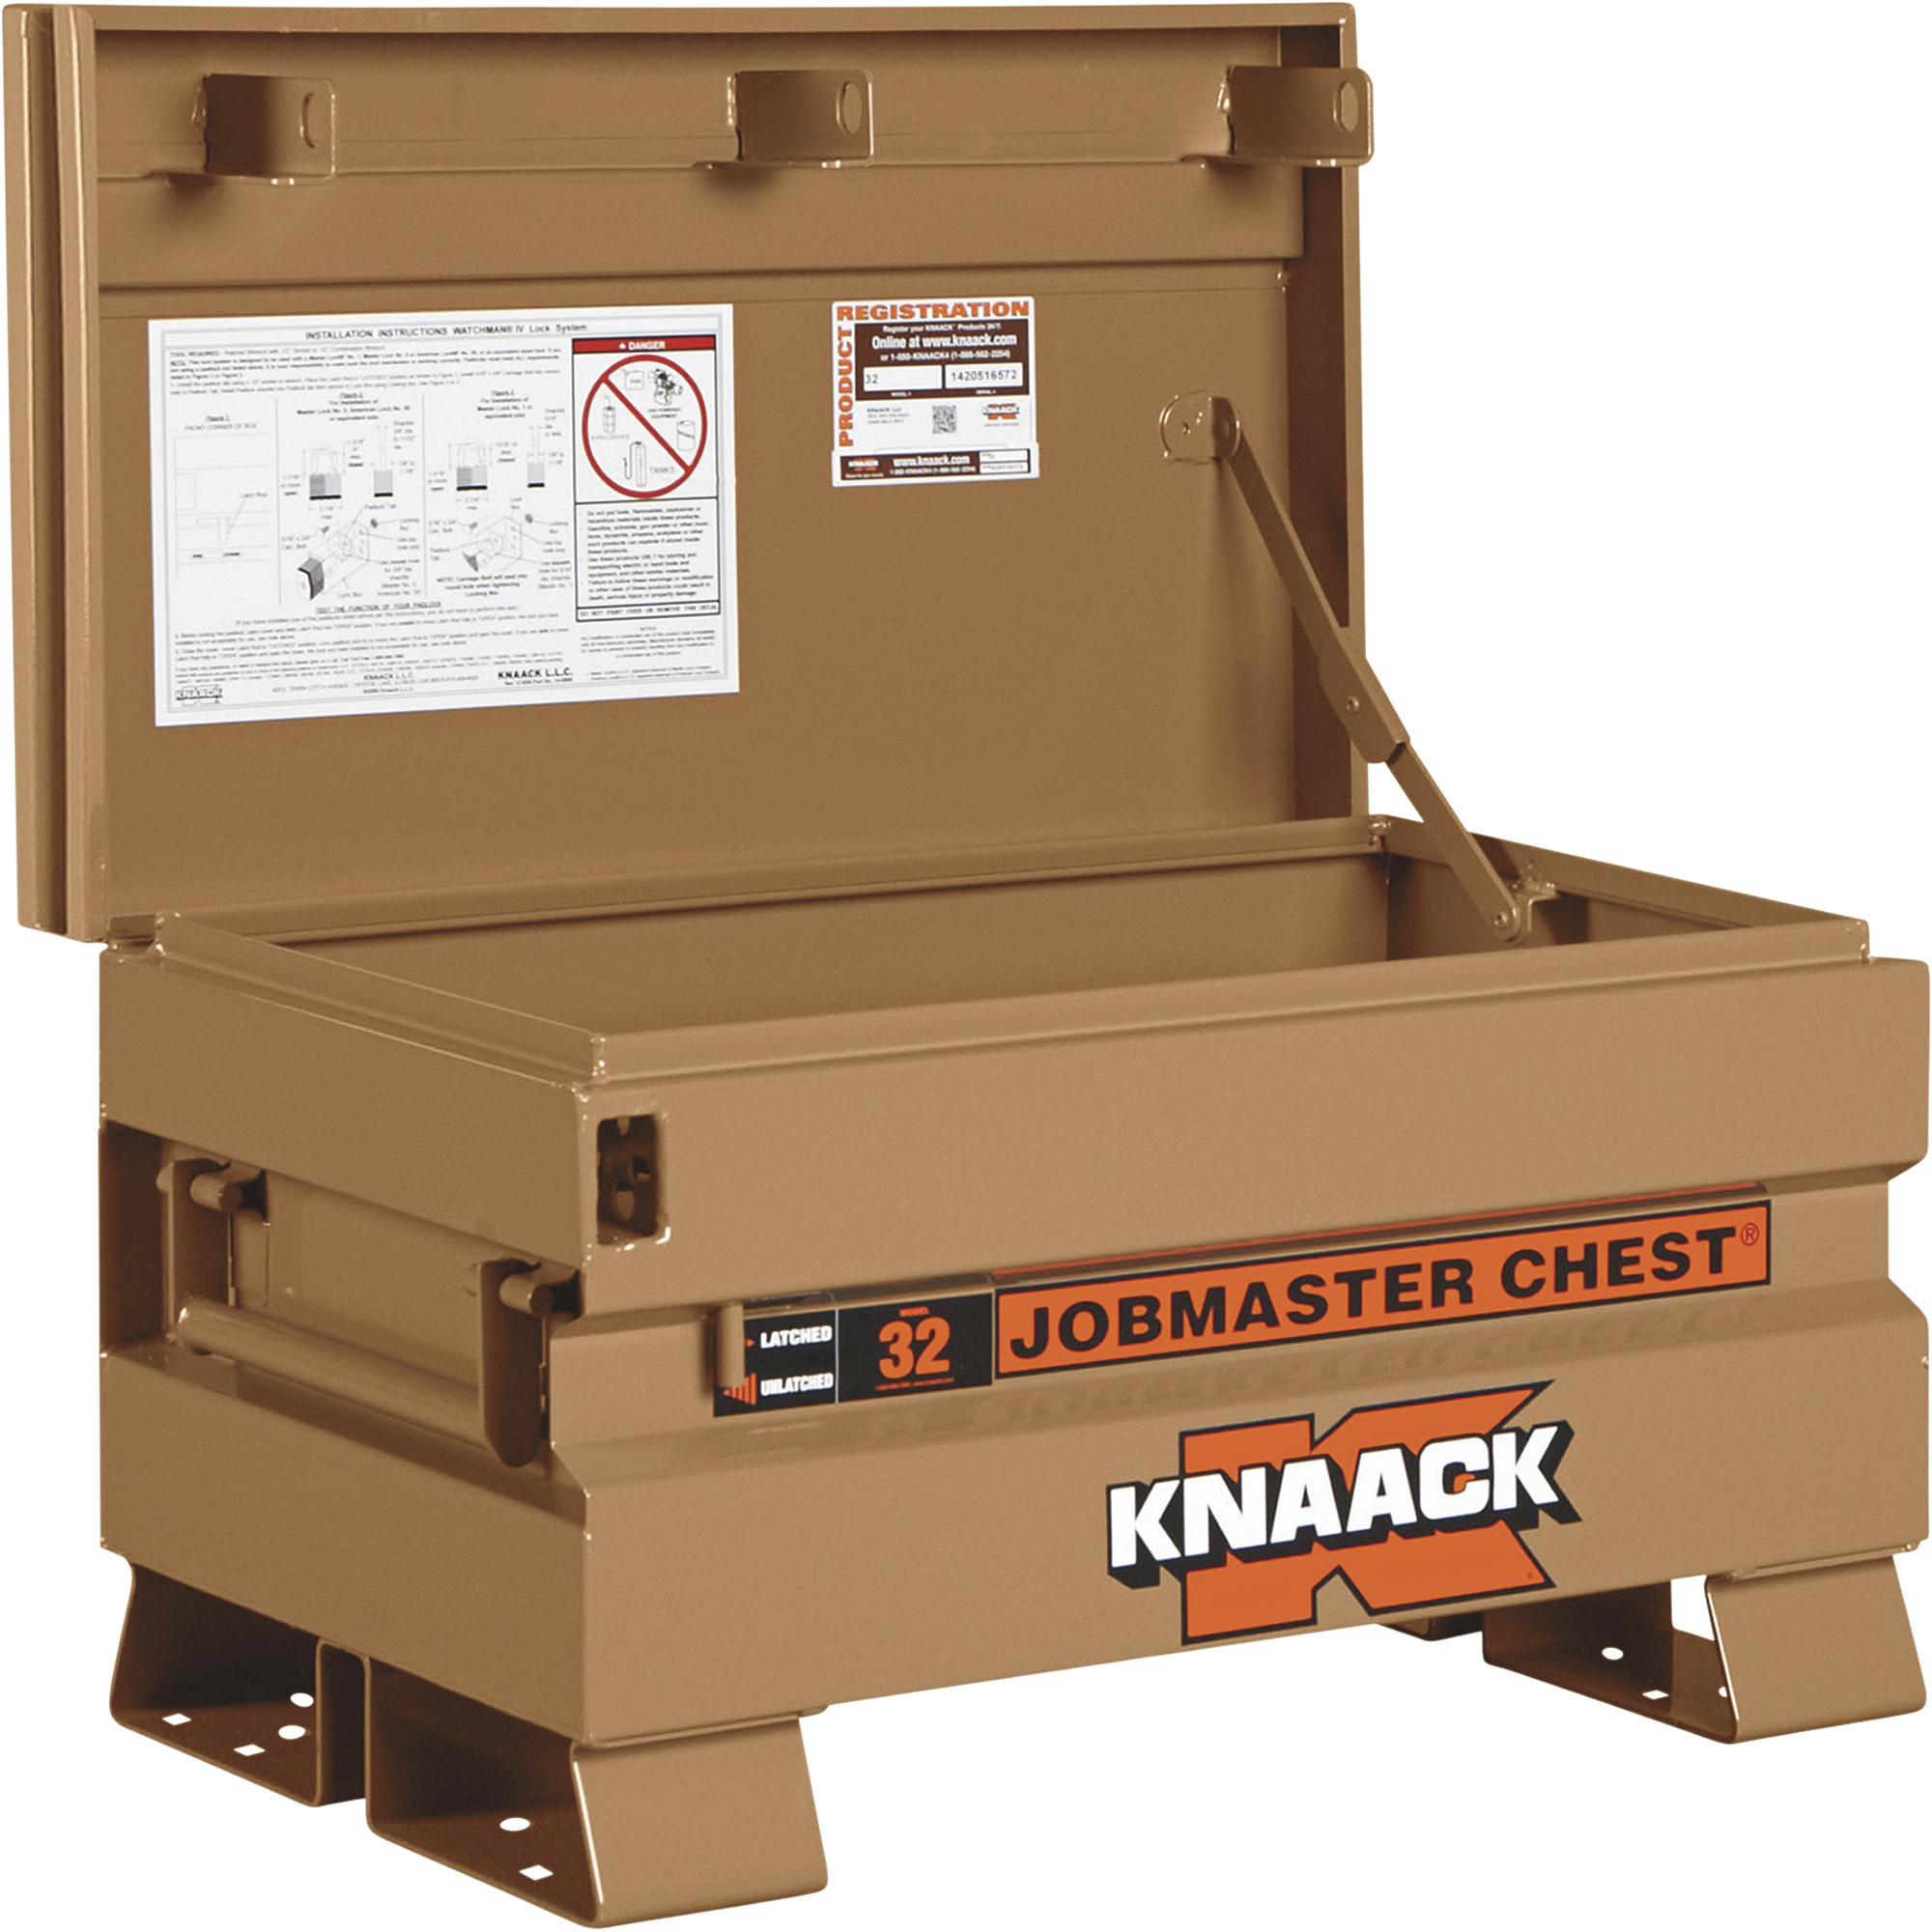 KNAACK Jobmaster Tool Box, Tan, 5 Cu. Ft. Capacity, 32Inch W x 19Inch D x 18.5Inch H, Model 32